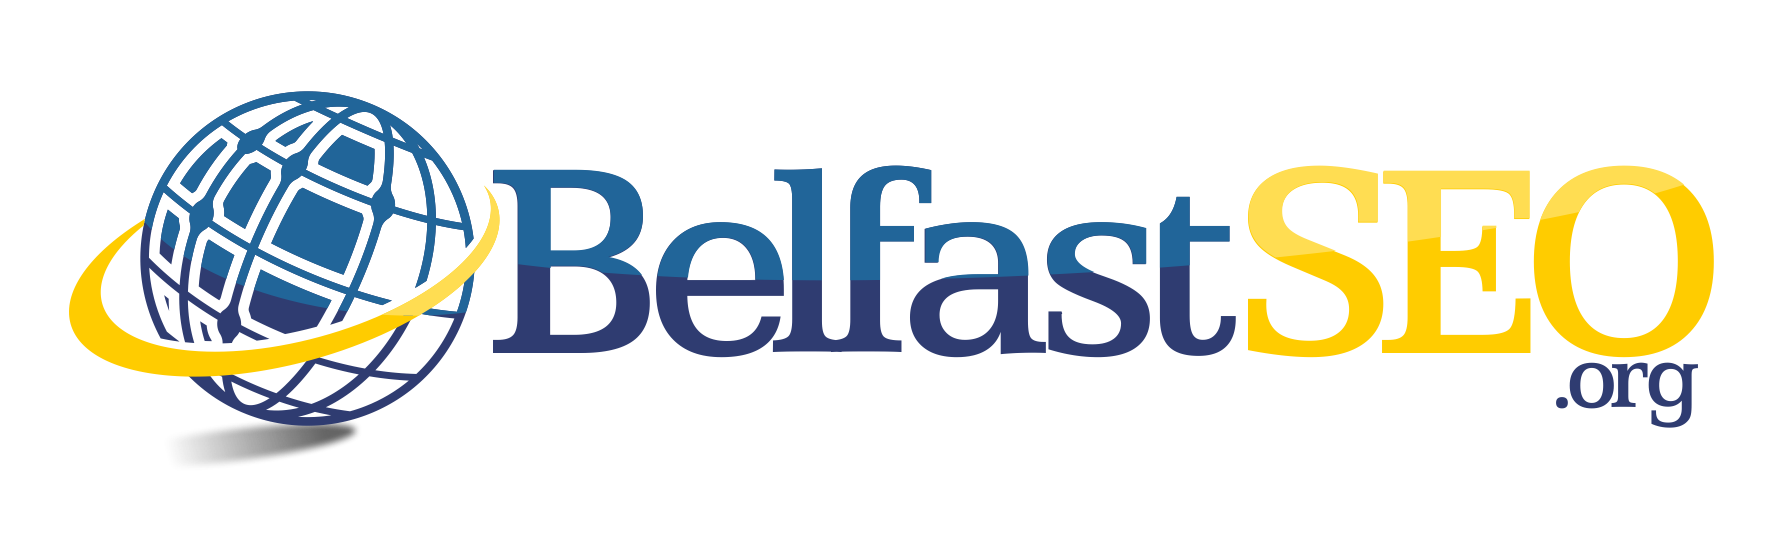 Belfast SEO Experts